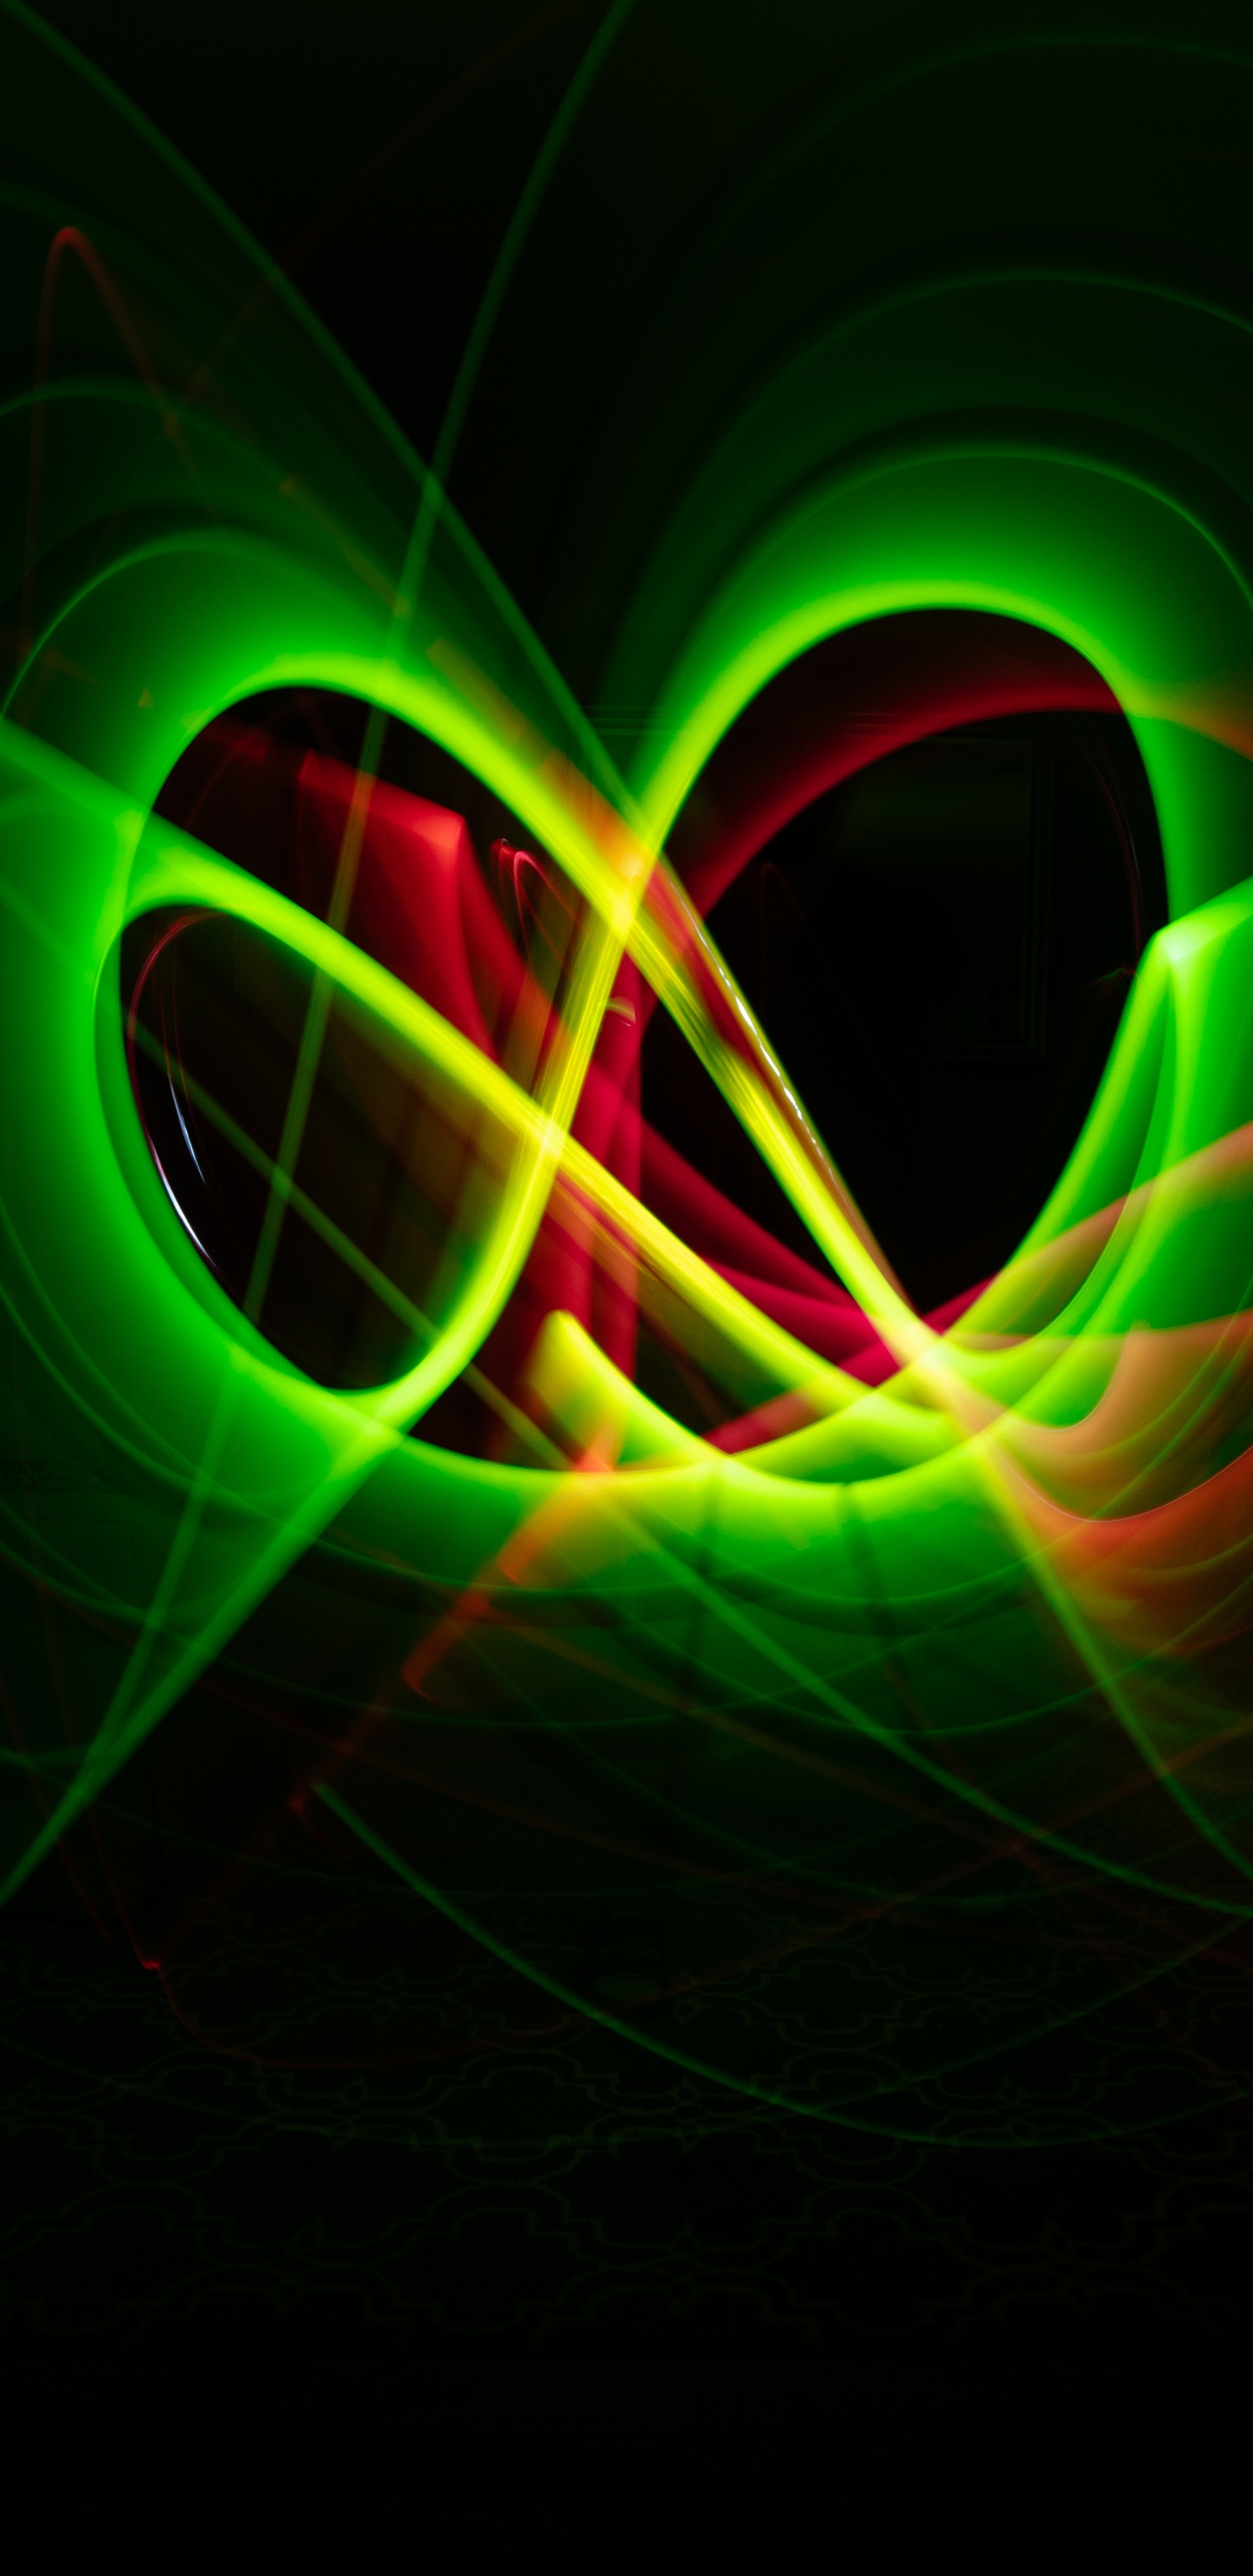 Green and Red Light Digital Wallpaper. Wallpaper in 1440x2960 Resolution